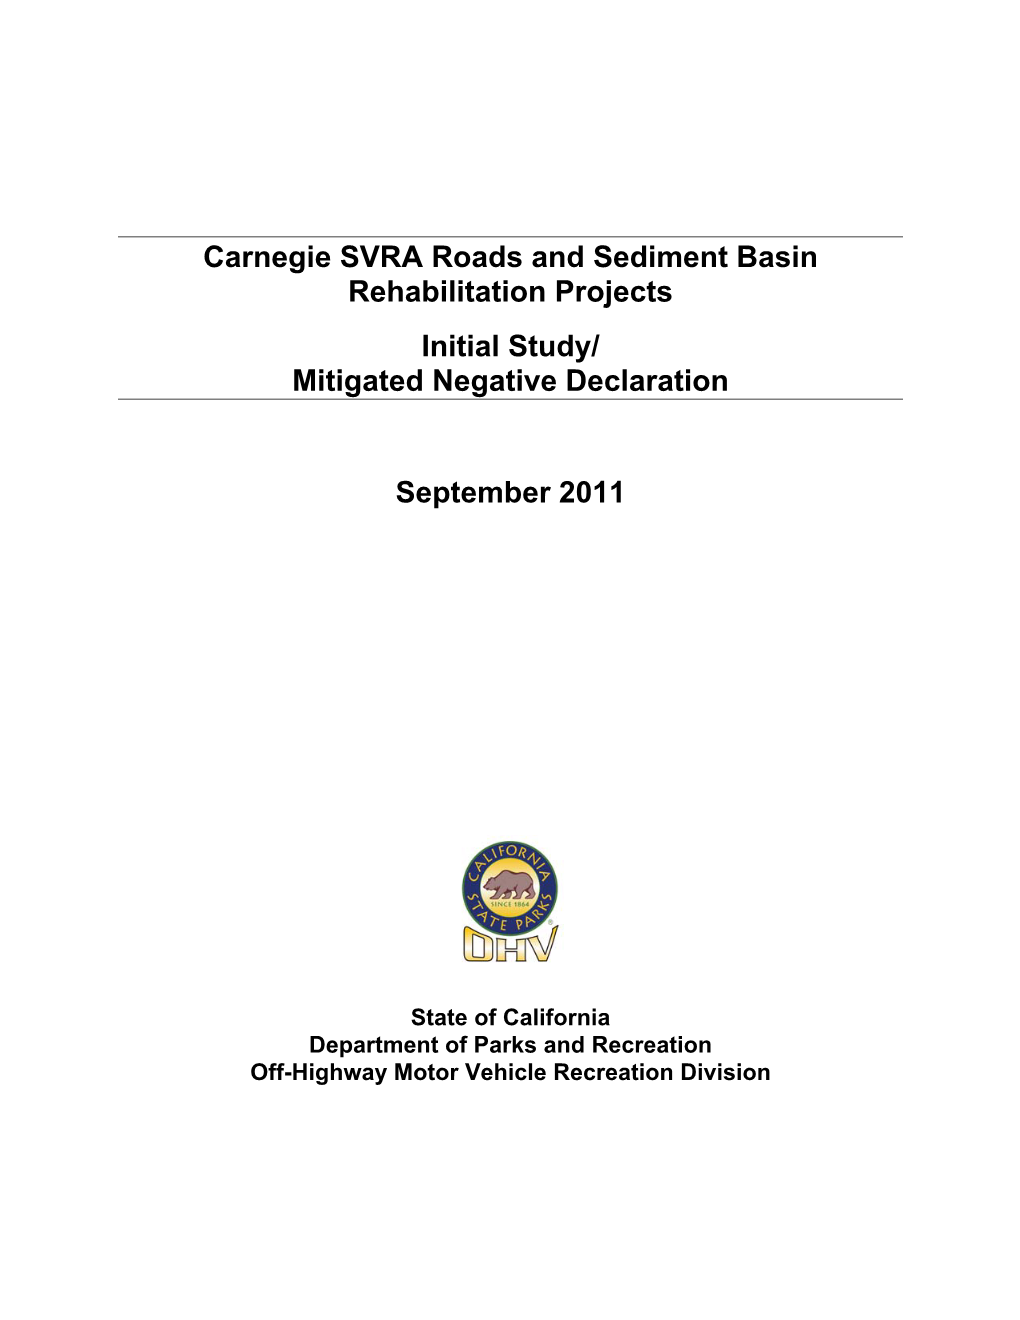 Carnegie SVRA Roads and Sediment Basin Rehabilitation Projects Initial Study/ Mitigated Negative Declaration